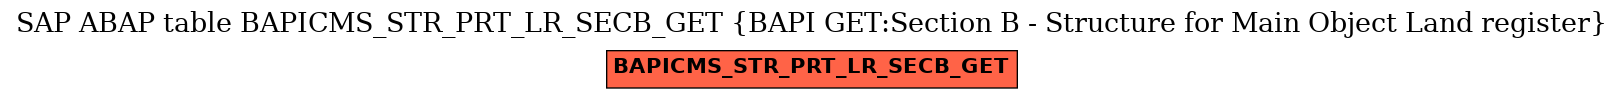 E-R Diagram for table BAPICMS_STR_PRT_LR_SECB_GET (BAPI GET:Section B - Structure for Main Object Land register)